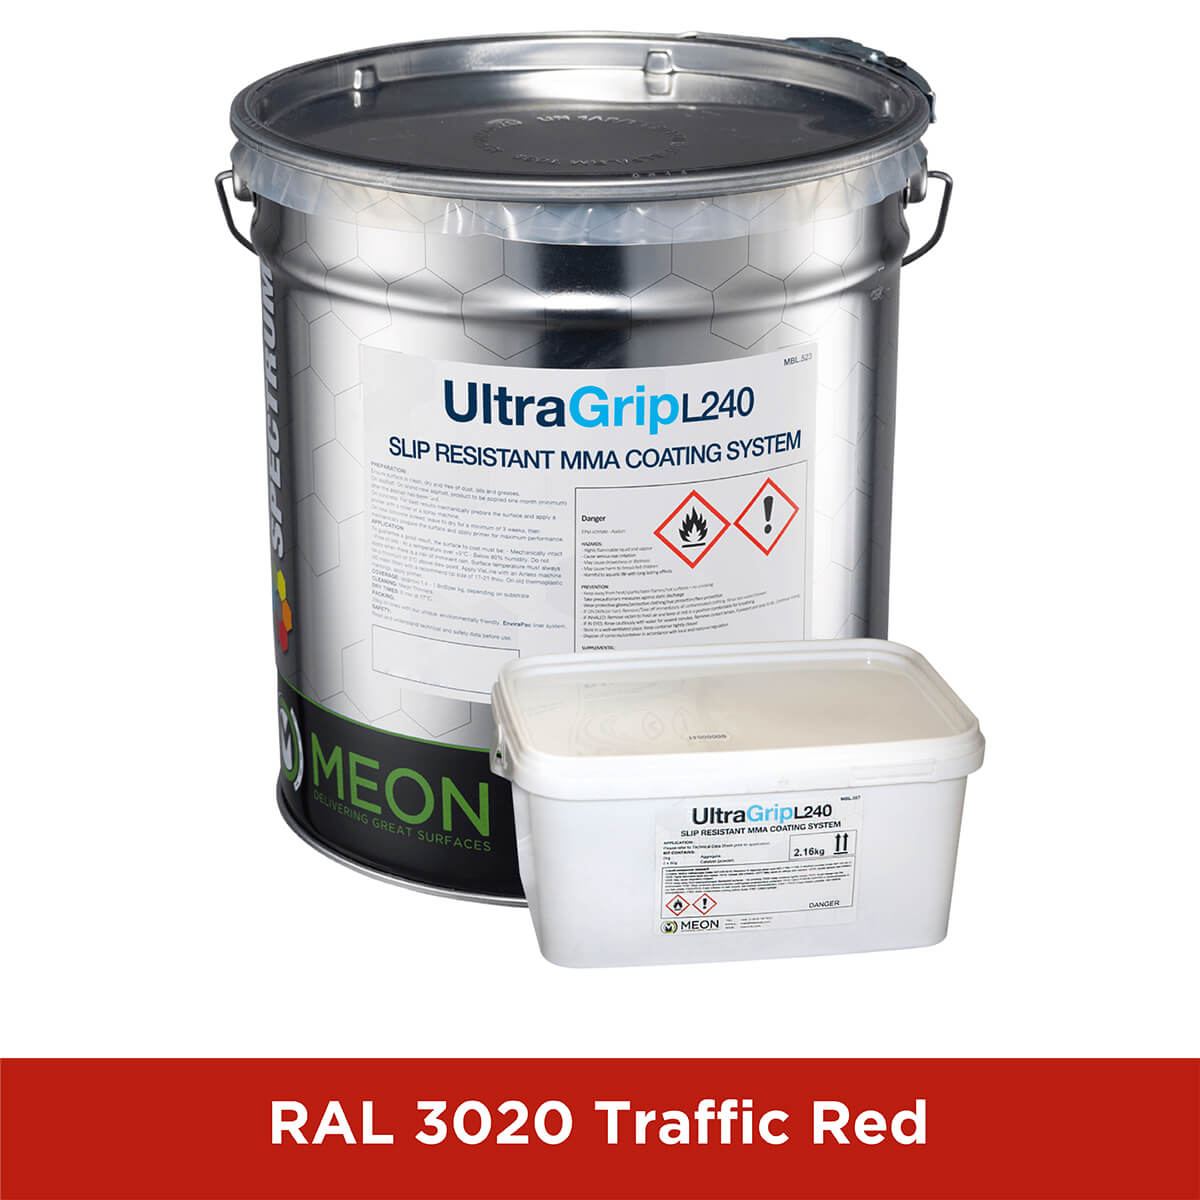 UltraGrip L240 MMA Hard Wearing Surface Coating Traffic Red 20kg